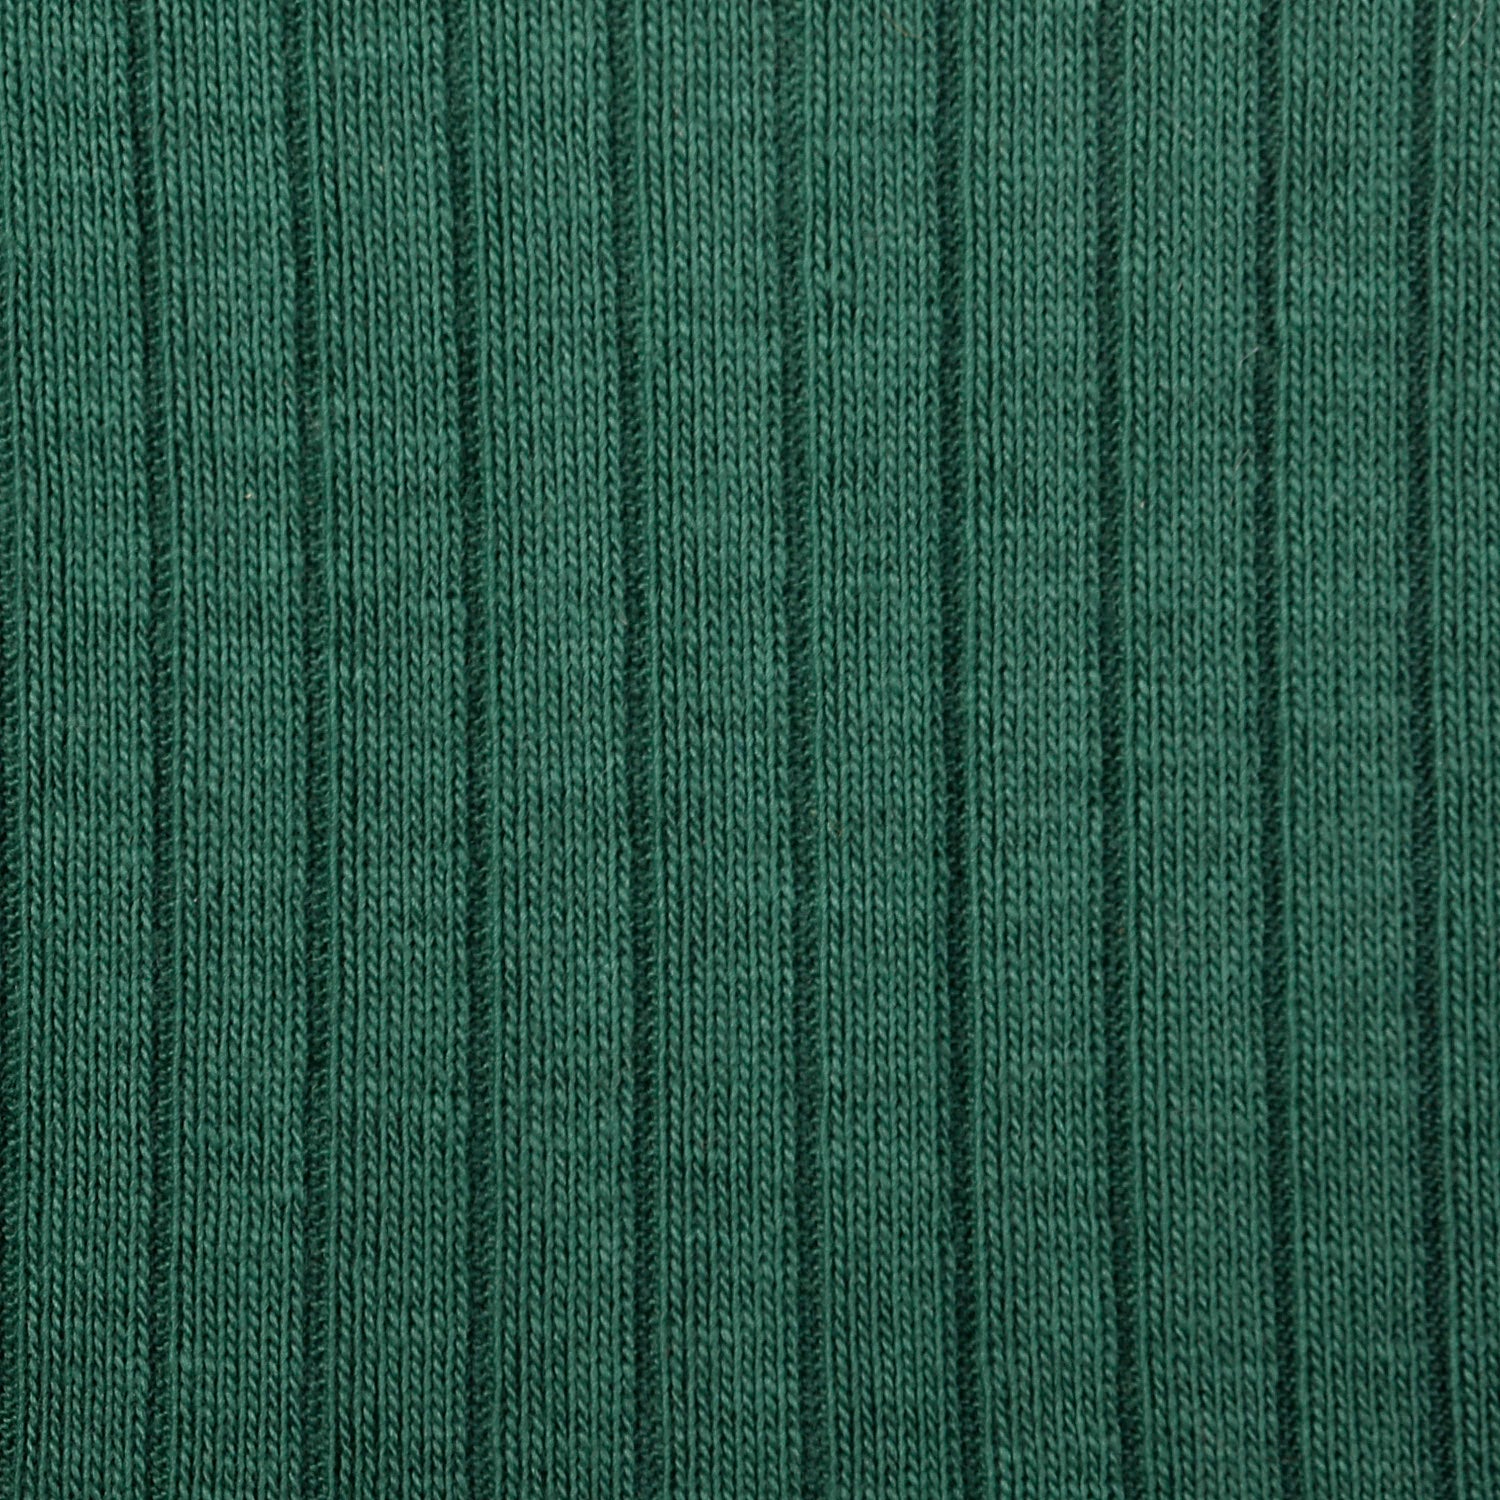 XS 1960s Green Deadstock Ribbed Long Sleeve Lightweight Knit Mock Turtleneck Shirt